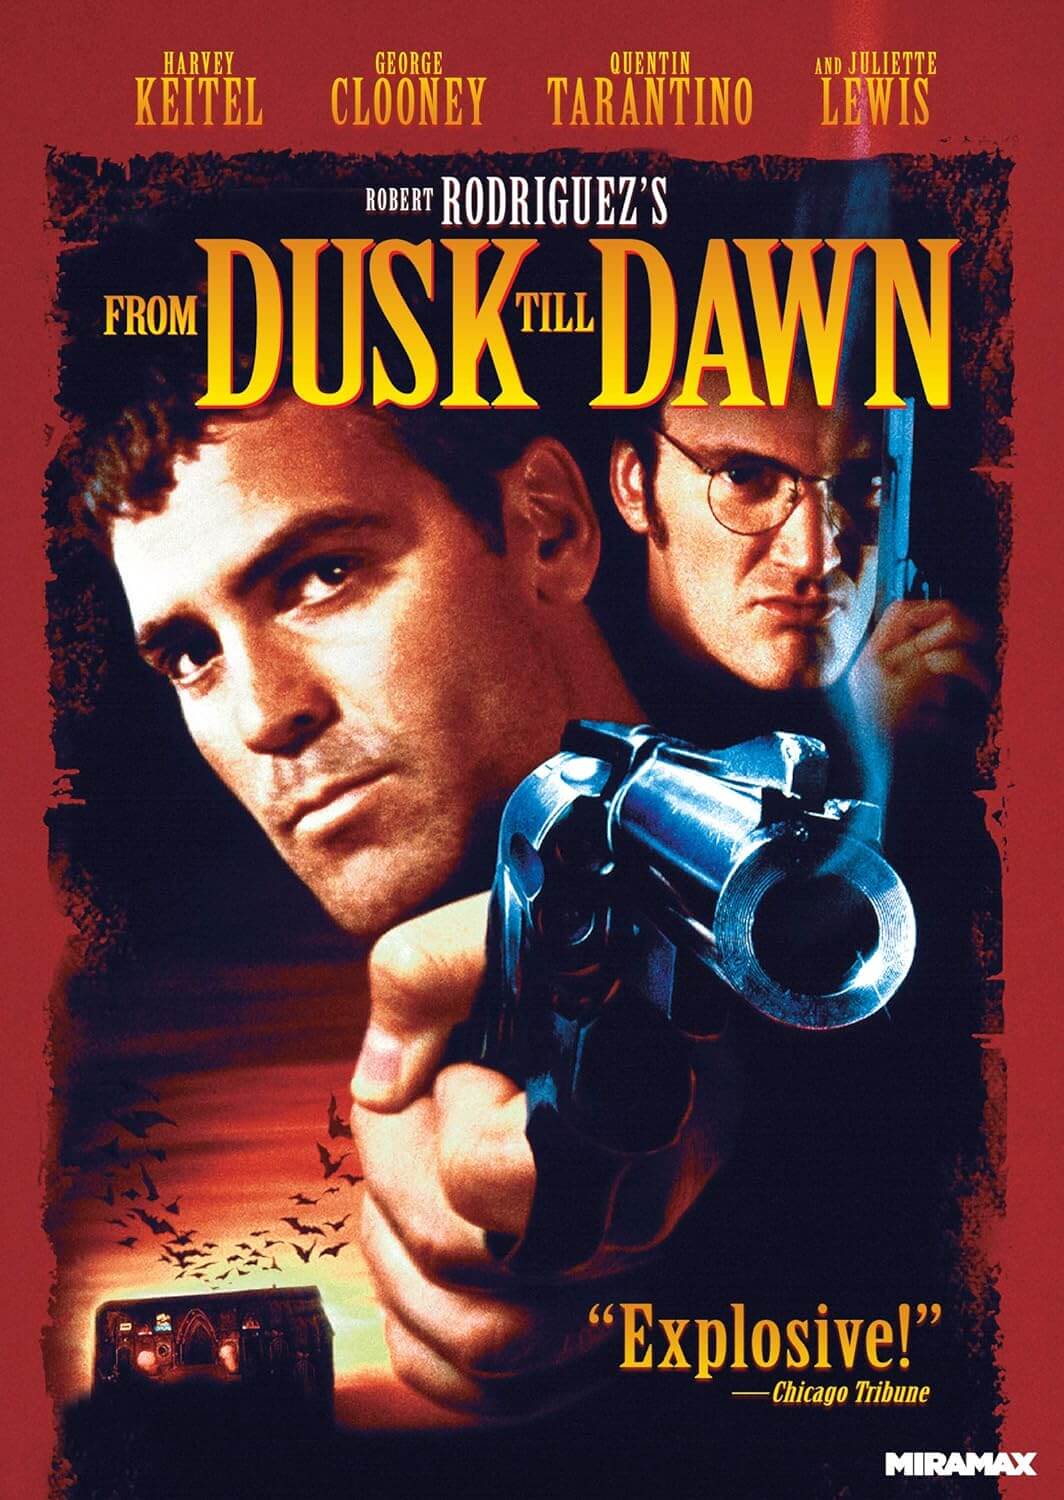 “From Dusk till Dawn” (1996)